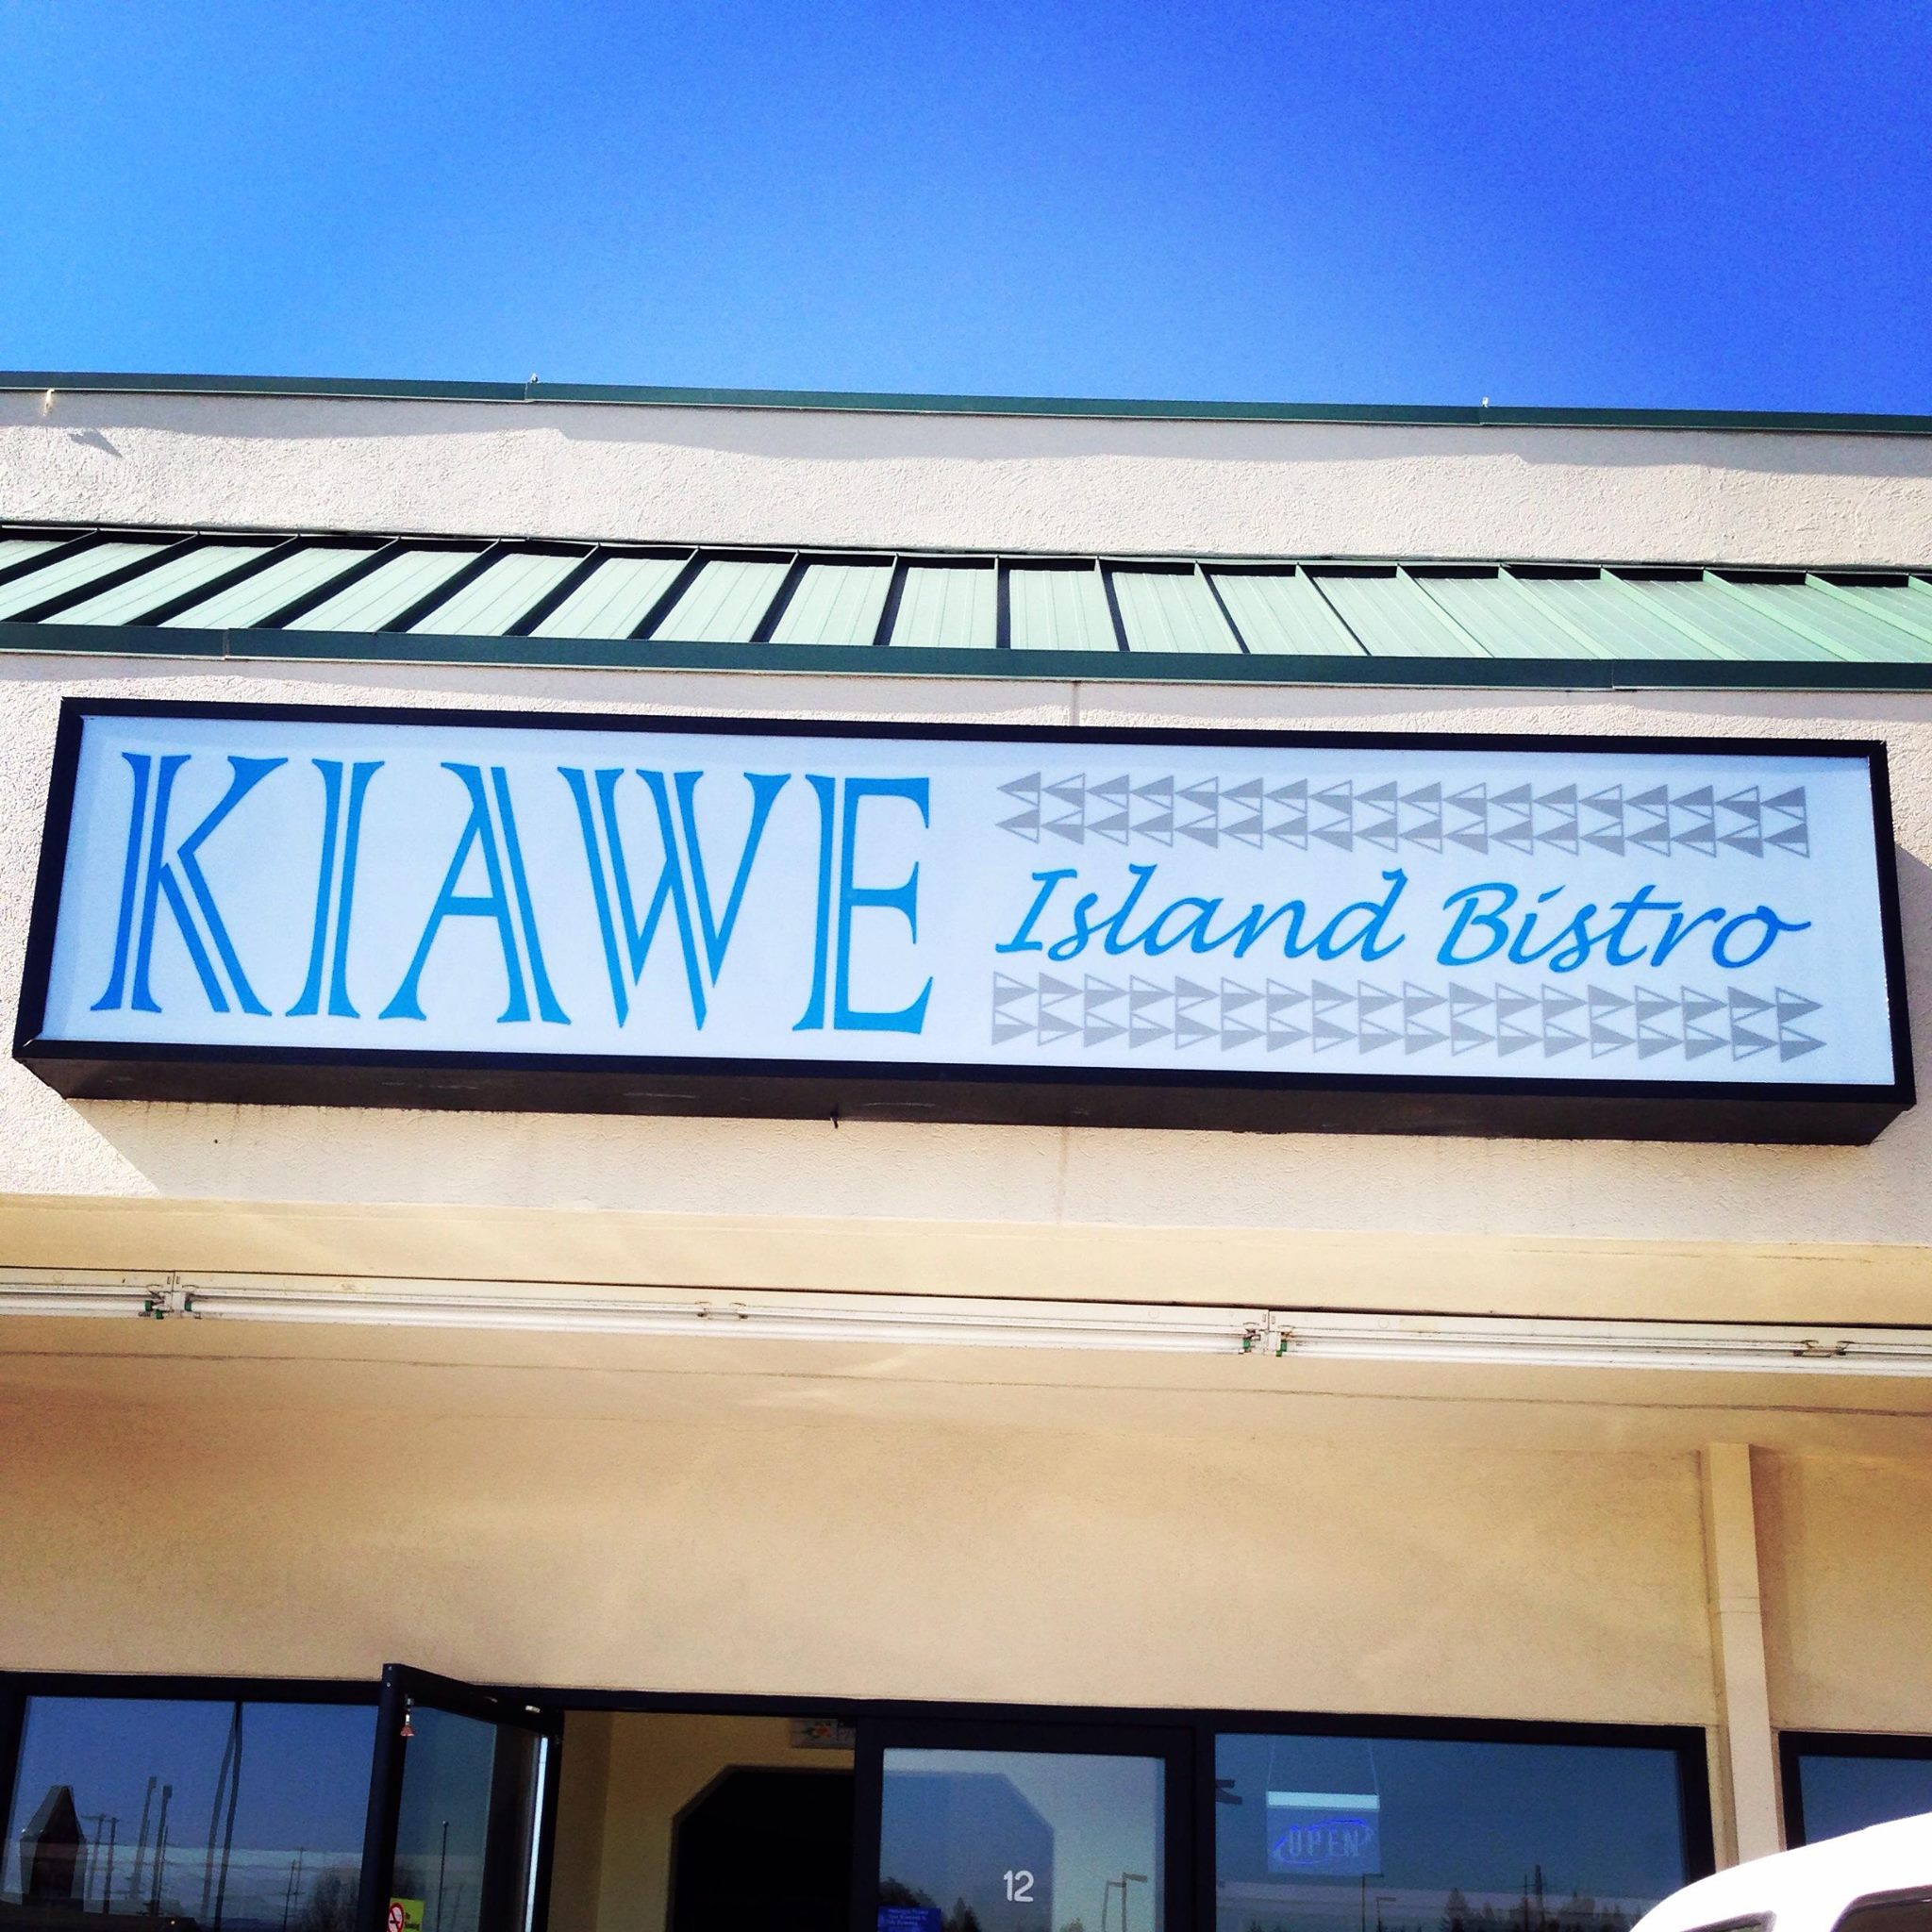 KIAWE Island Bistro (Vancouver, WA)